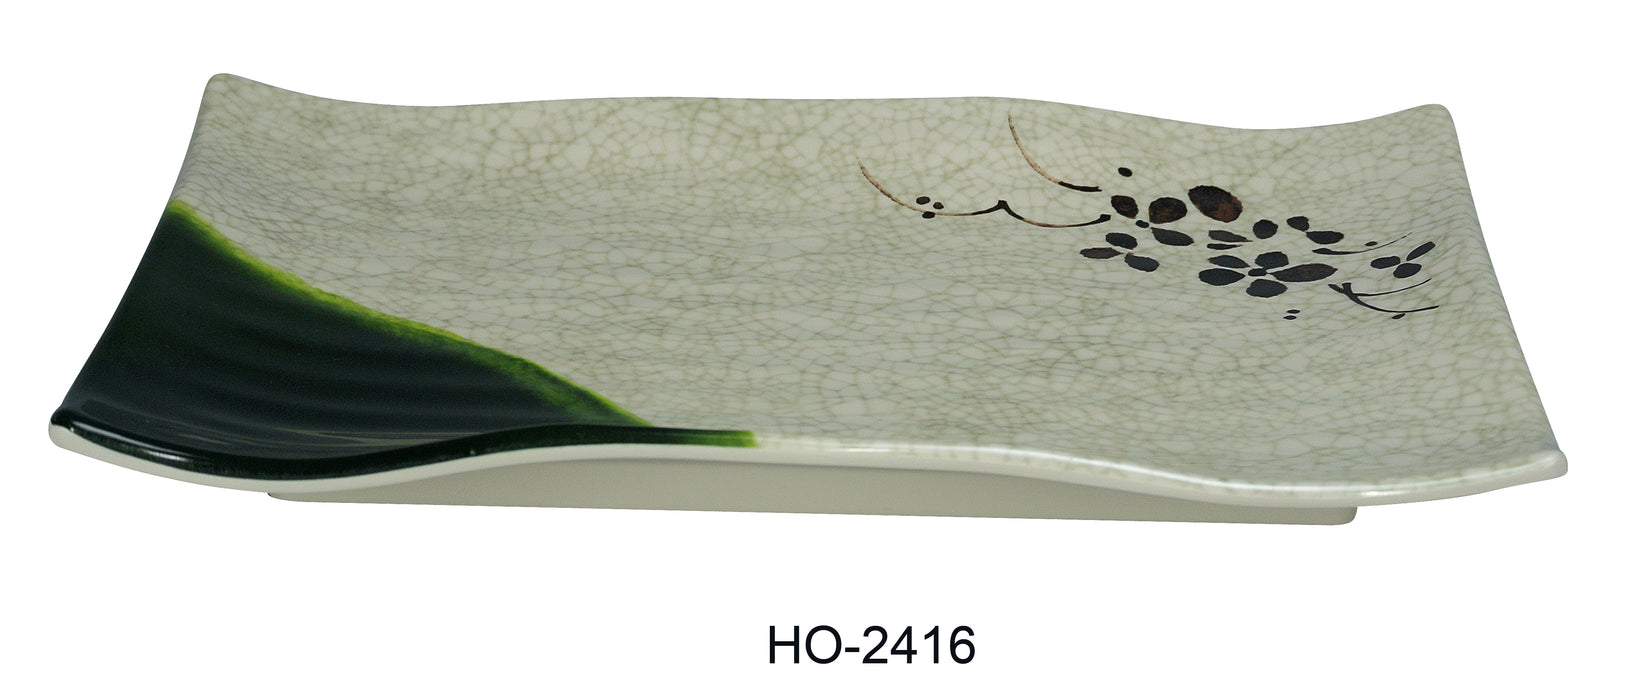 Yanco HO-2416 Honda Ripple Plate, Shape: Rectangular, Color: Three-Tone Green, Brown, Beige, Material: Melamine, Pack of 12